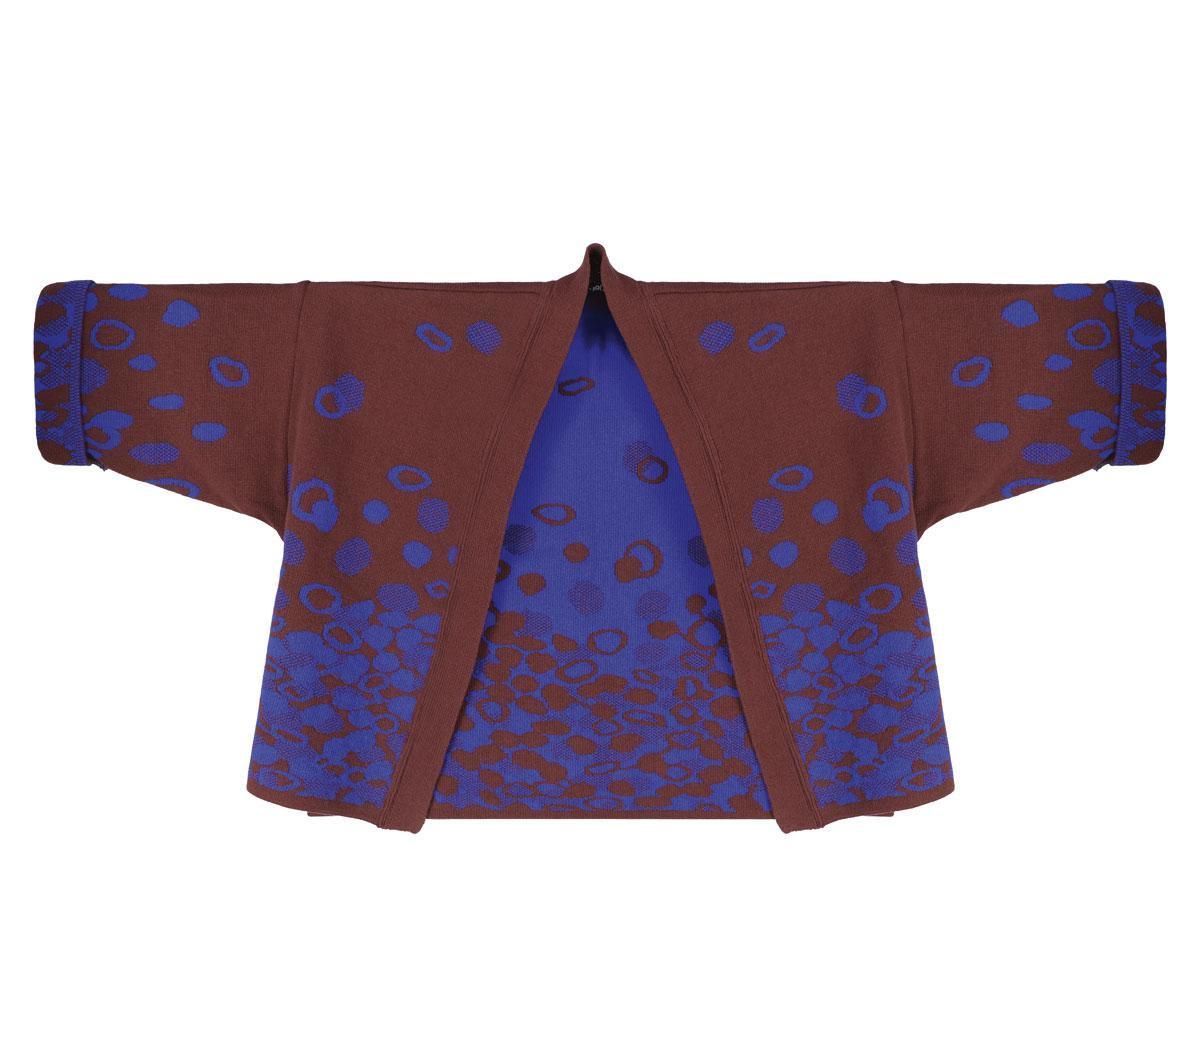 Kimono (270 euro), Wolvis, wolvis.be